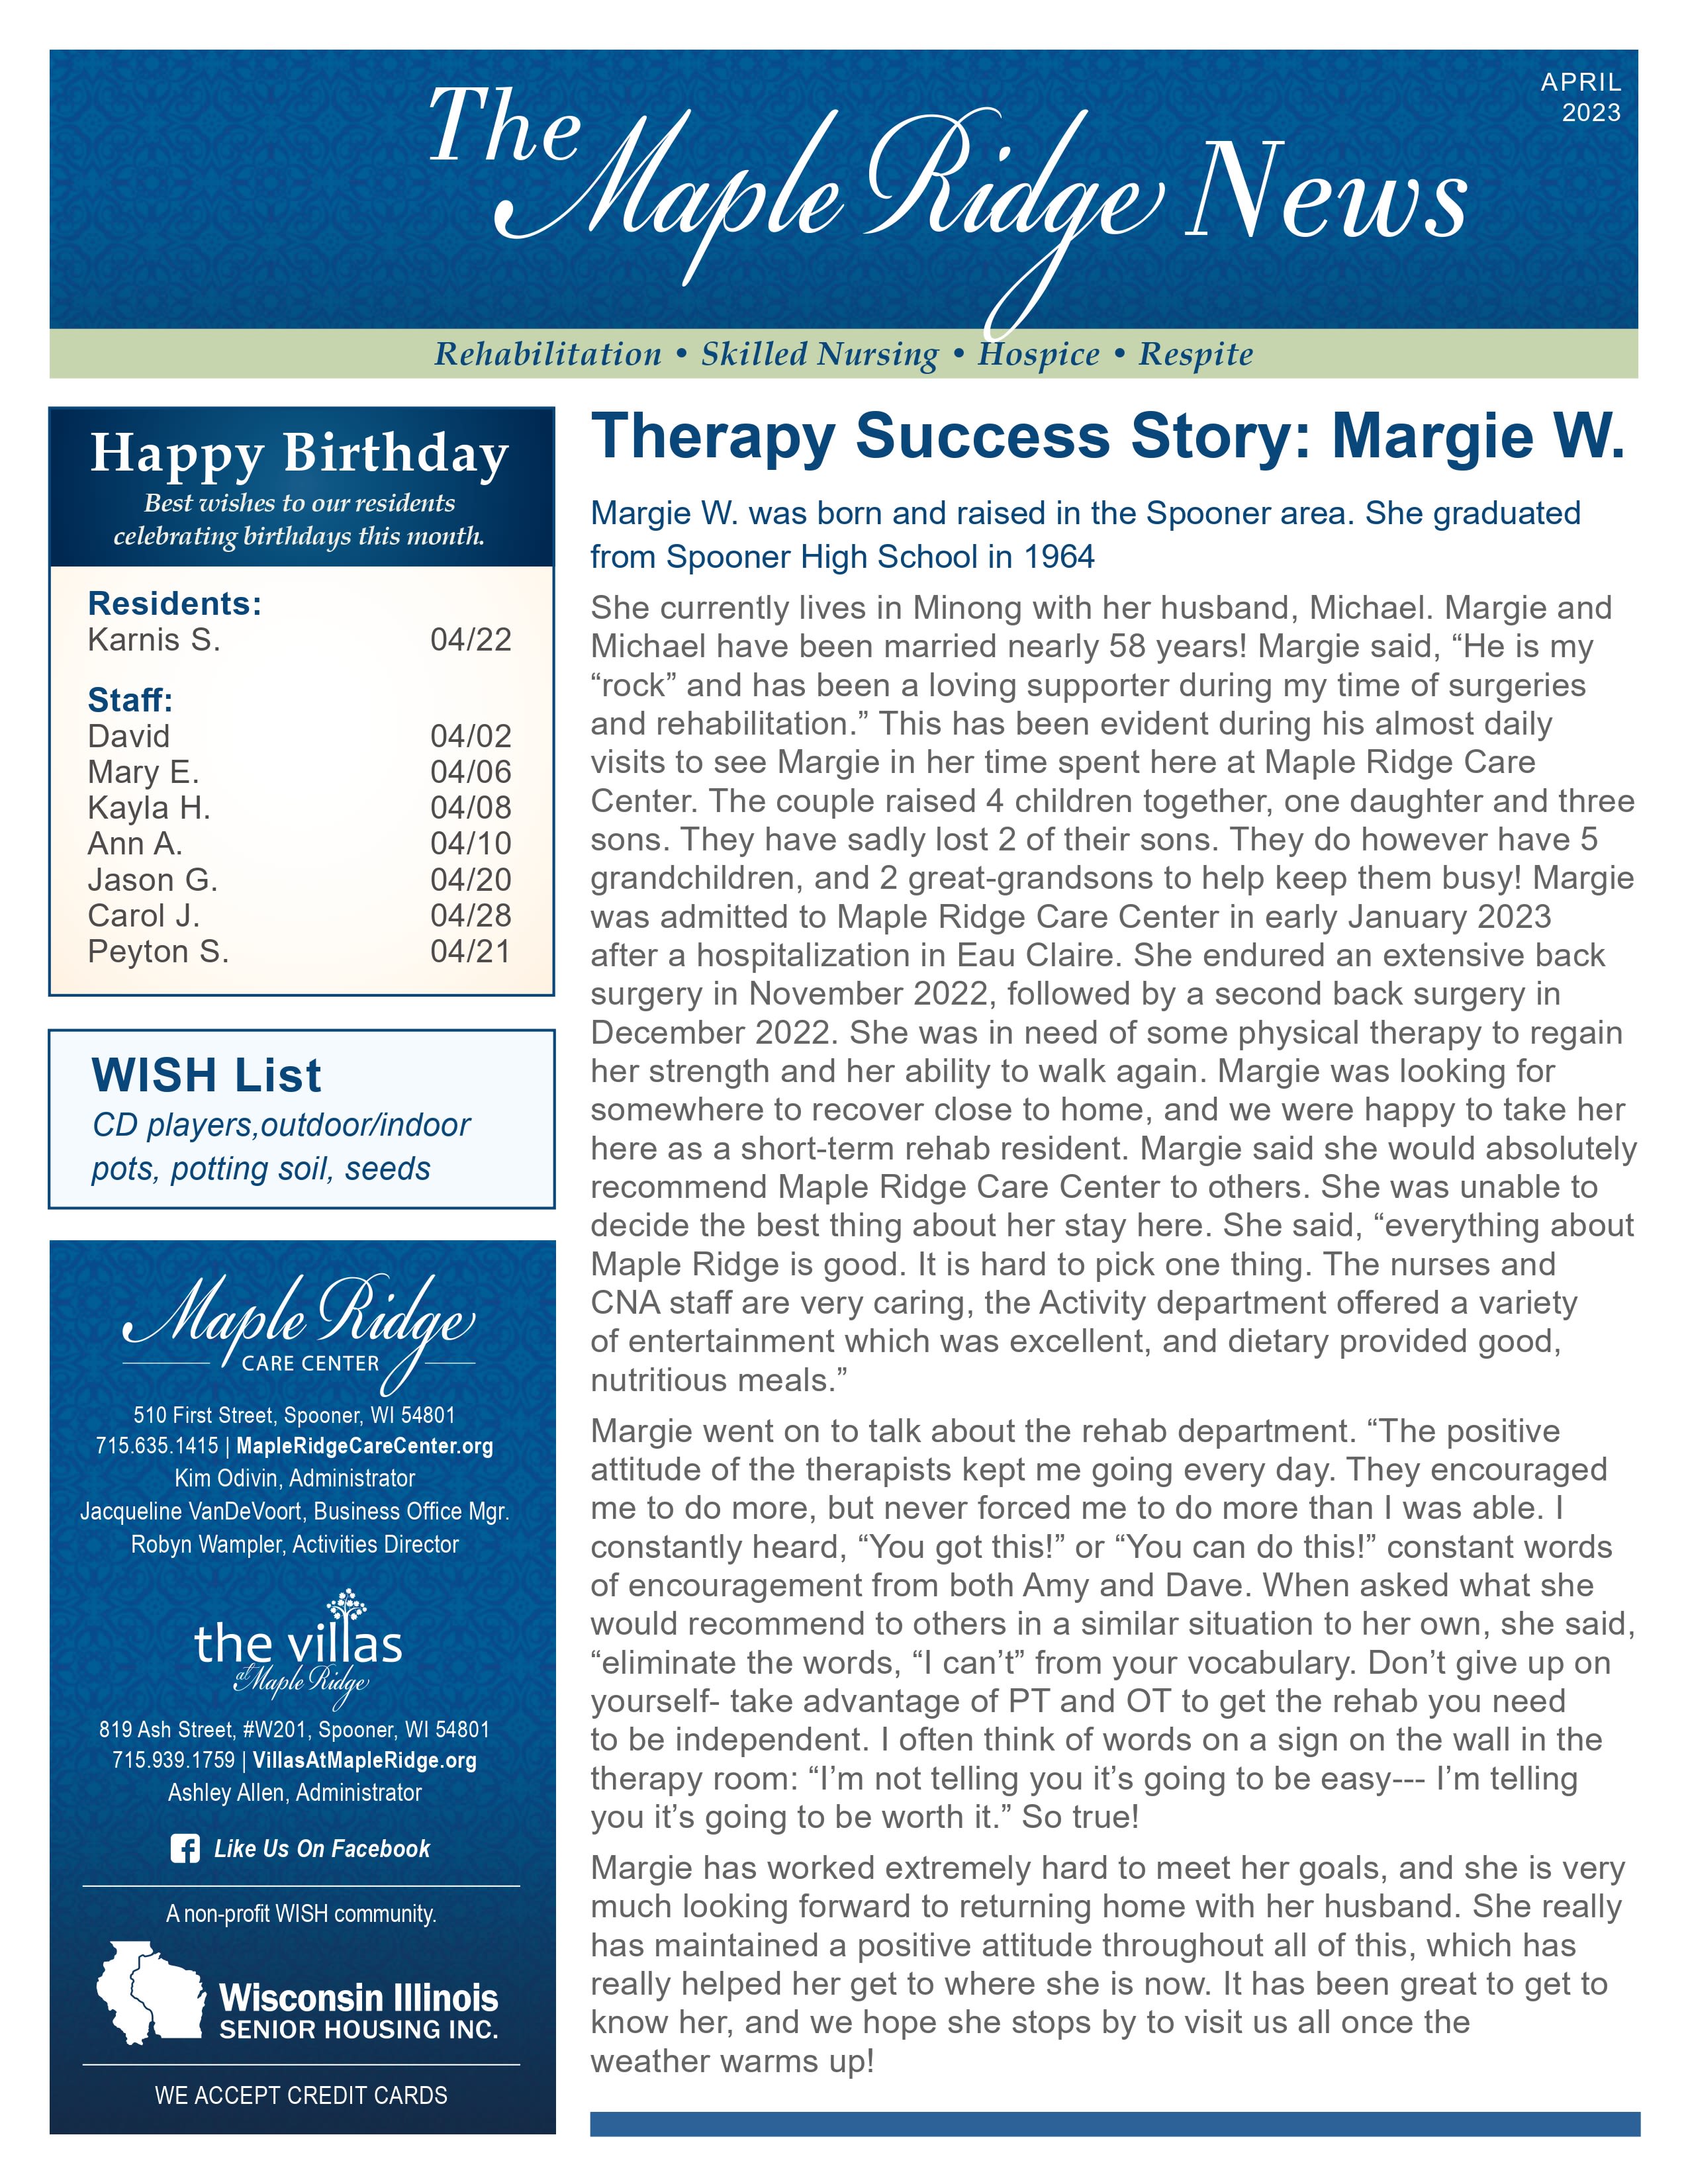 April 2023 Newsletter at Maple Ridge Care Center in Spooner, Wisconsin